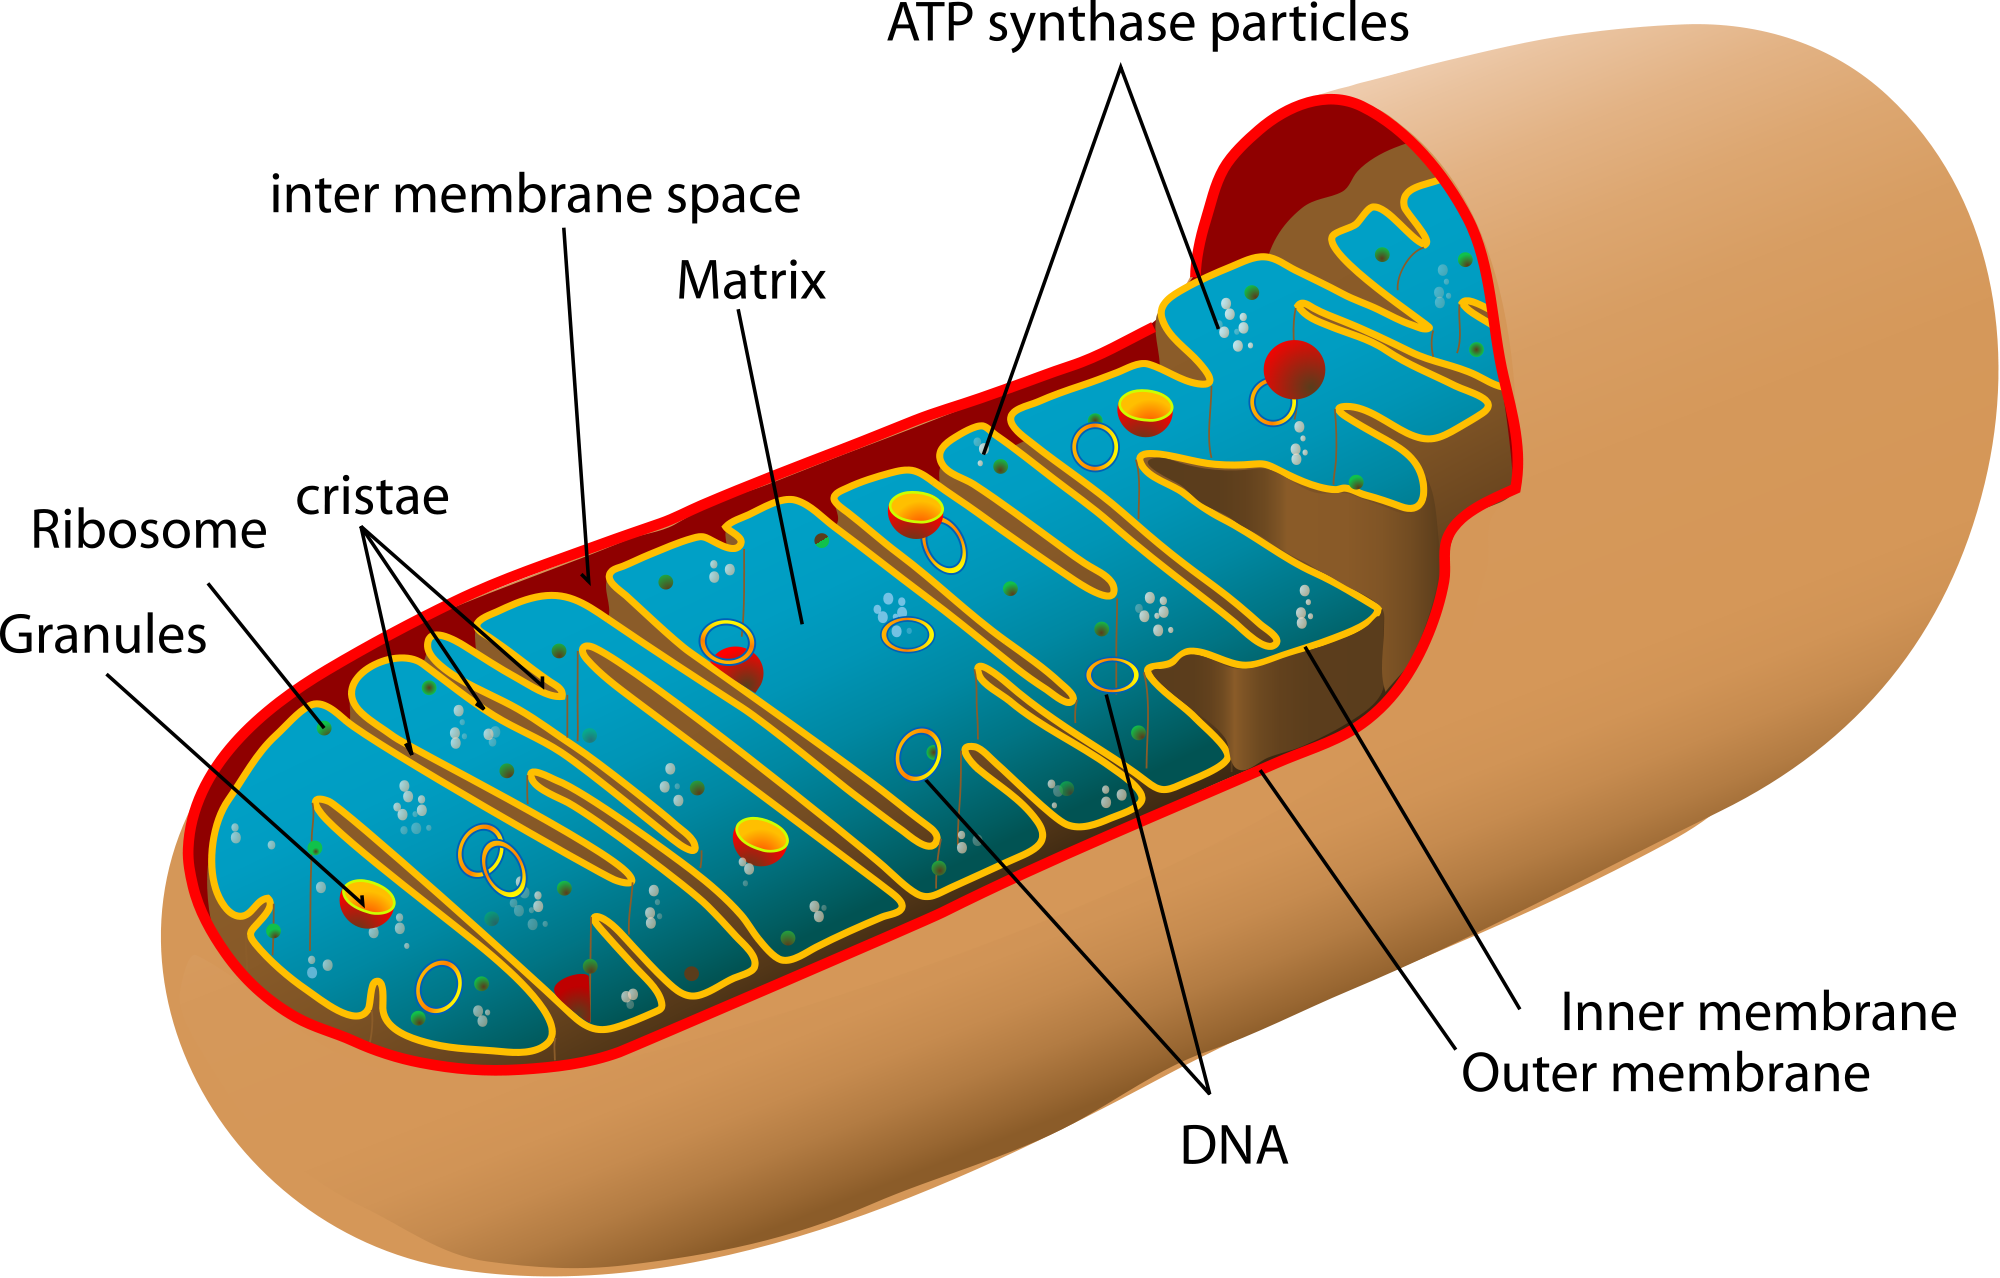 Mitochondrion diagram by Mariana Ruiz Villarreal